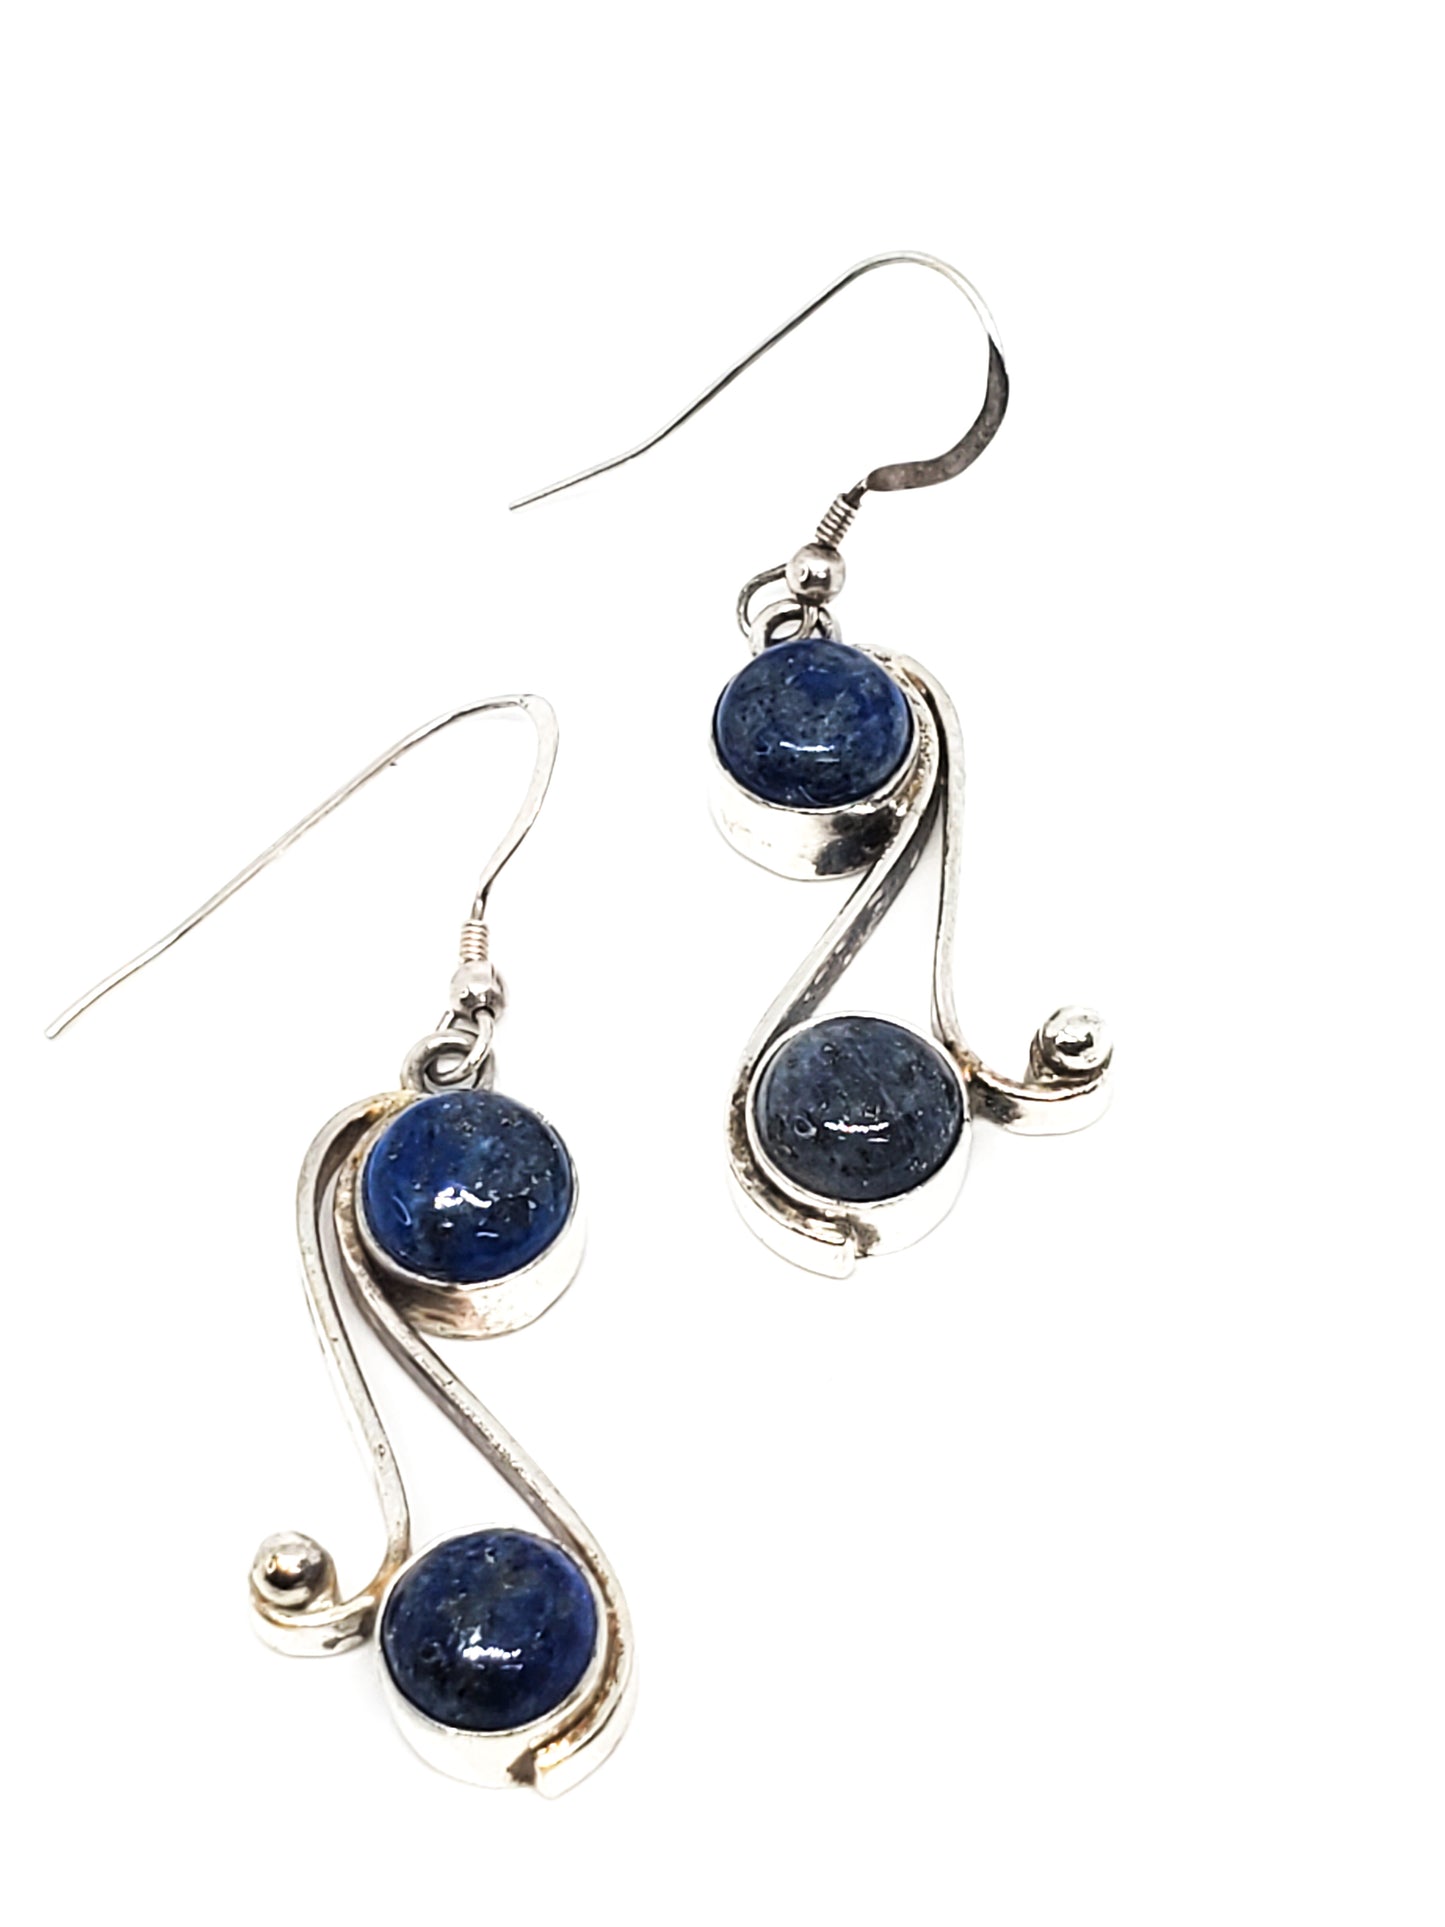 Vintage Tribal Bali Lapis Lazuli blue gemstone sterling silver earrings 925